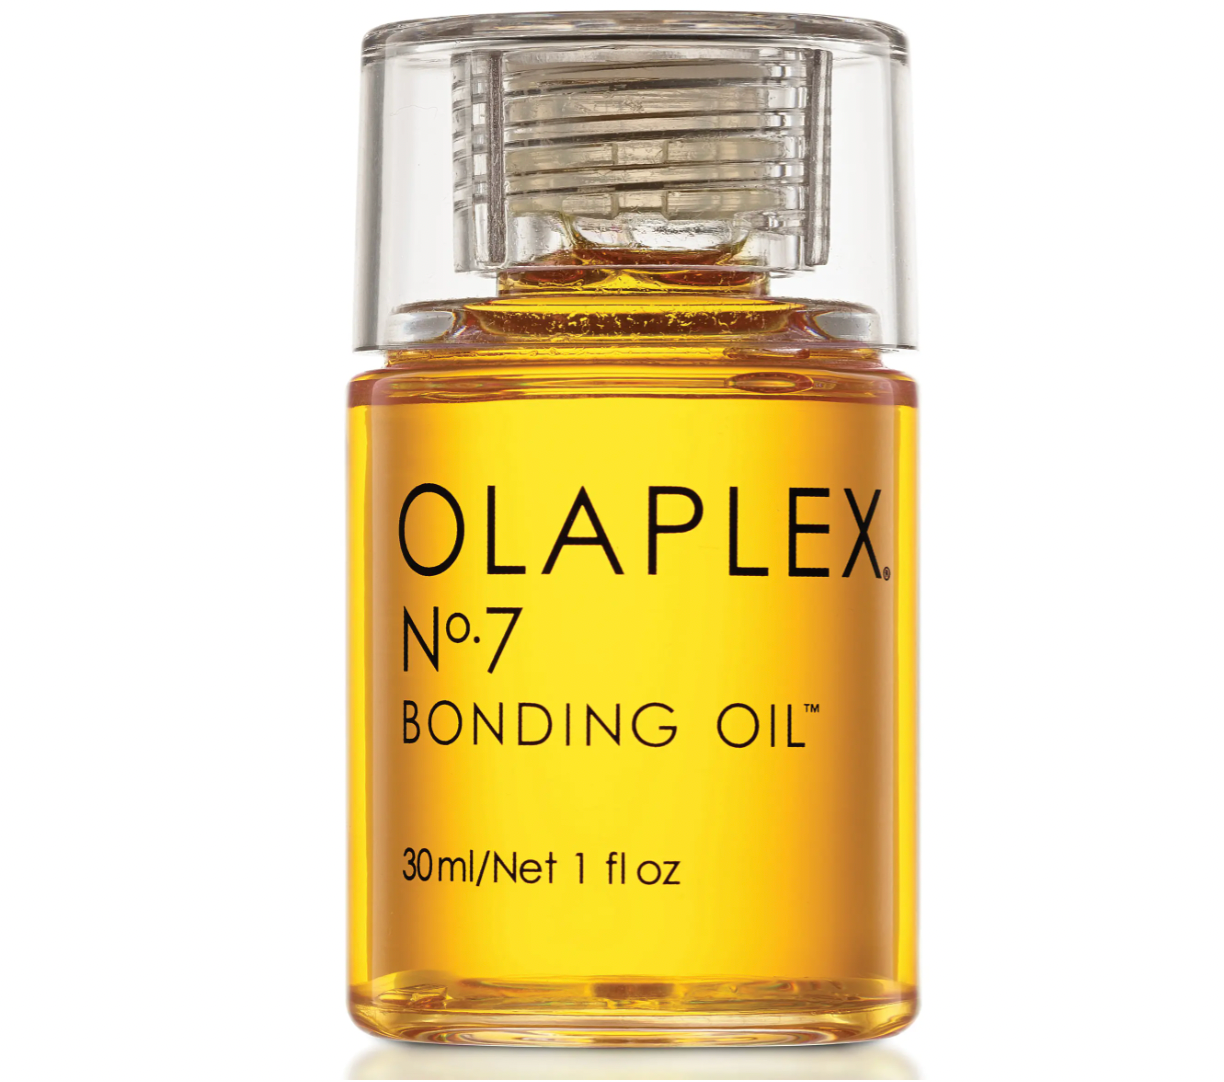 Olaplex No. 7 Bonding Oil